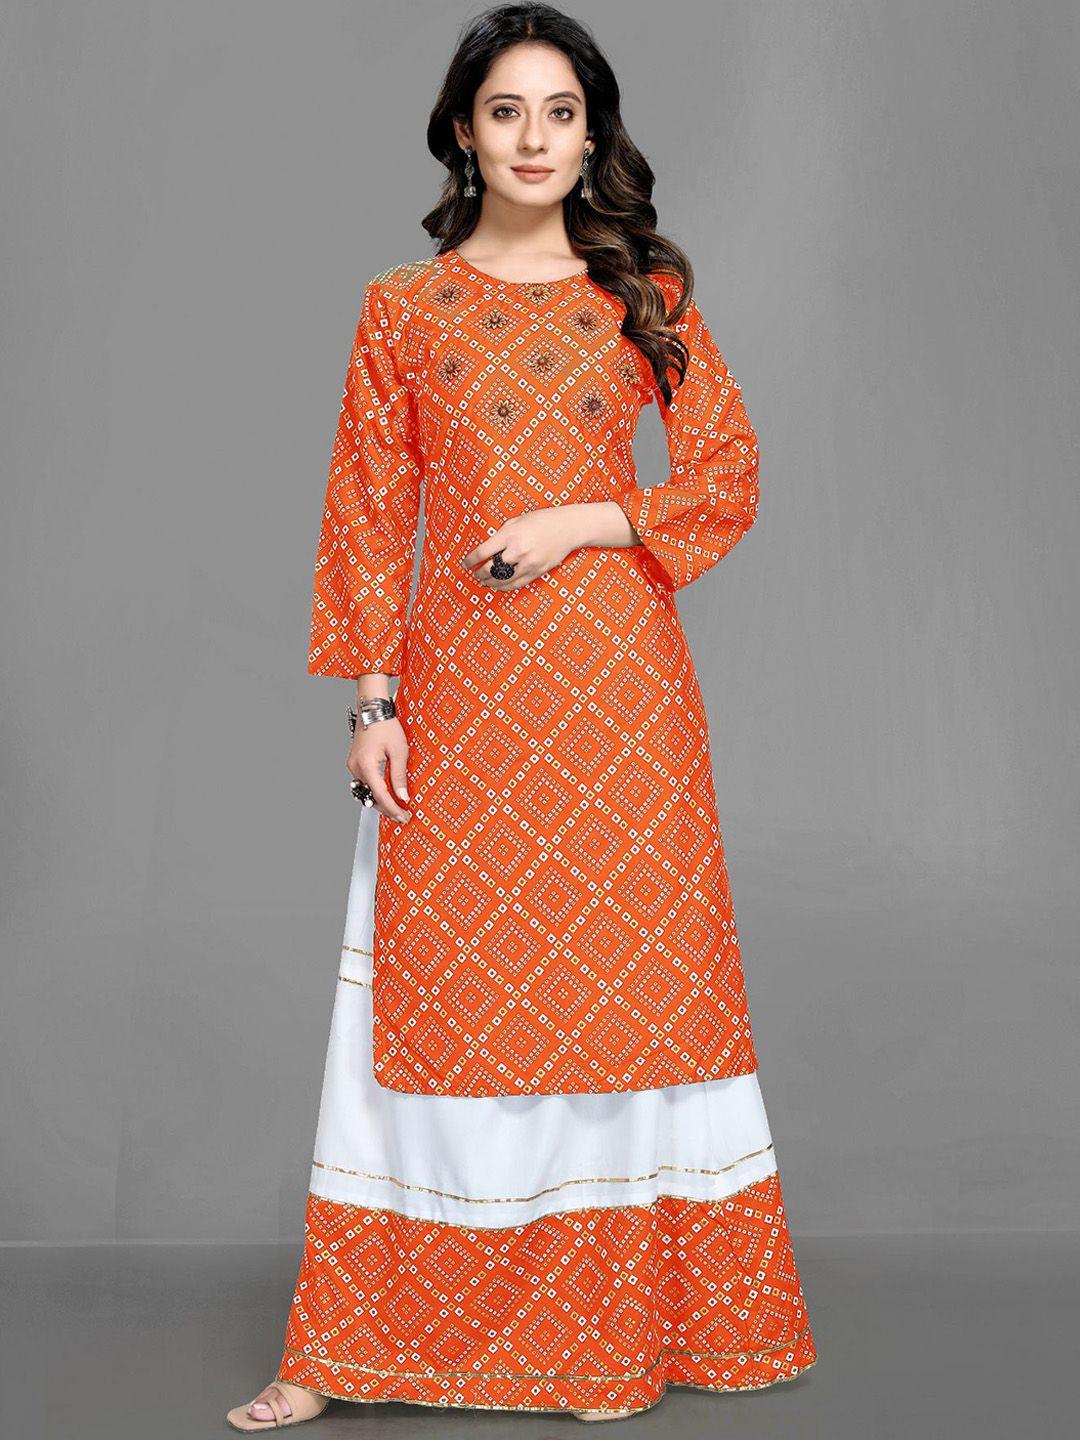 queenswear creation women orange ethnic motifs printed beads and stones kurta with skirt